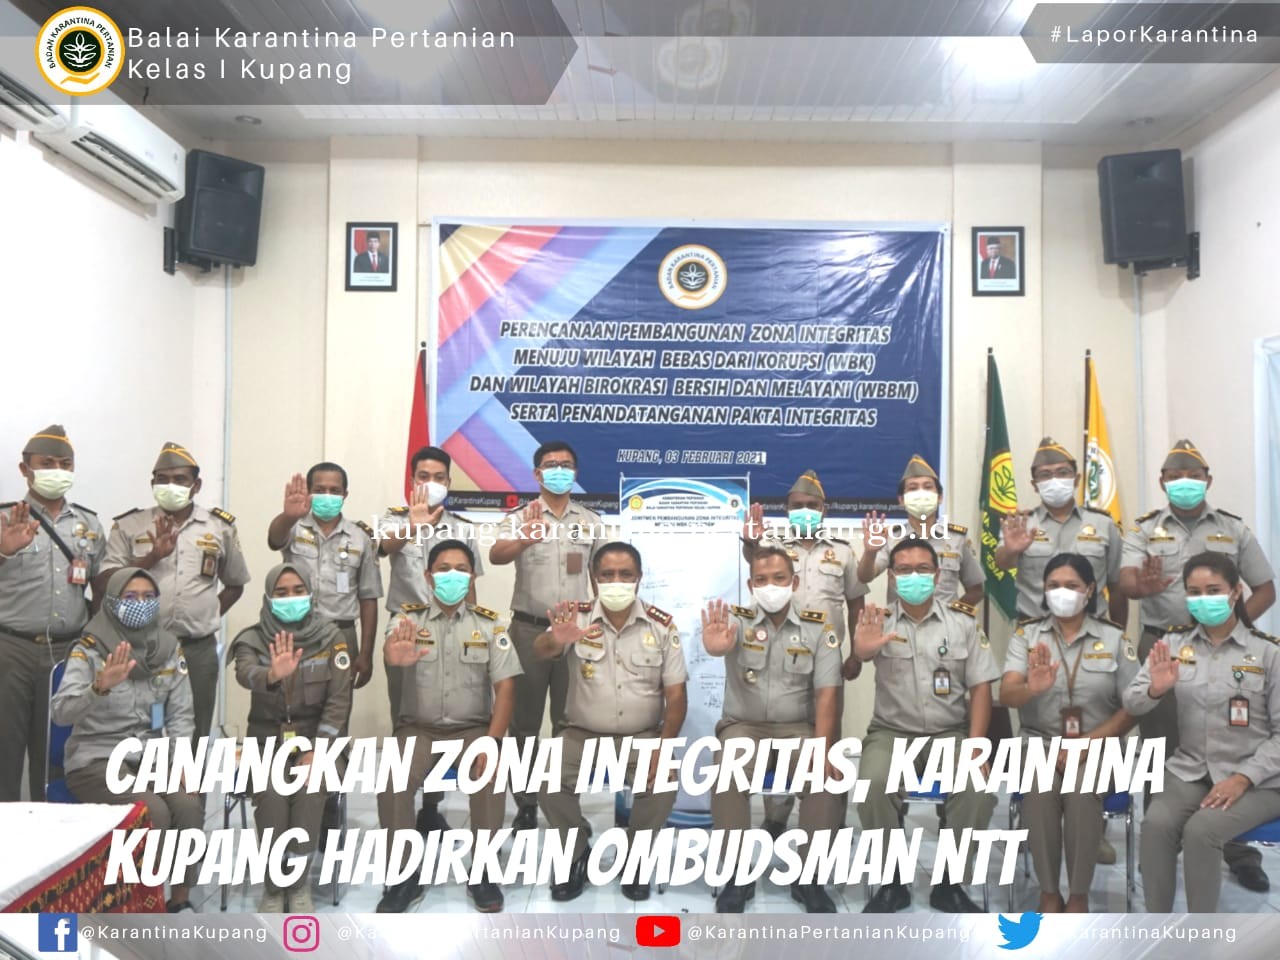 Canangkan Zona Integritas, Karantina Kupang Hadirkan Ombudsman NTT